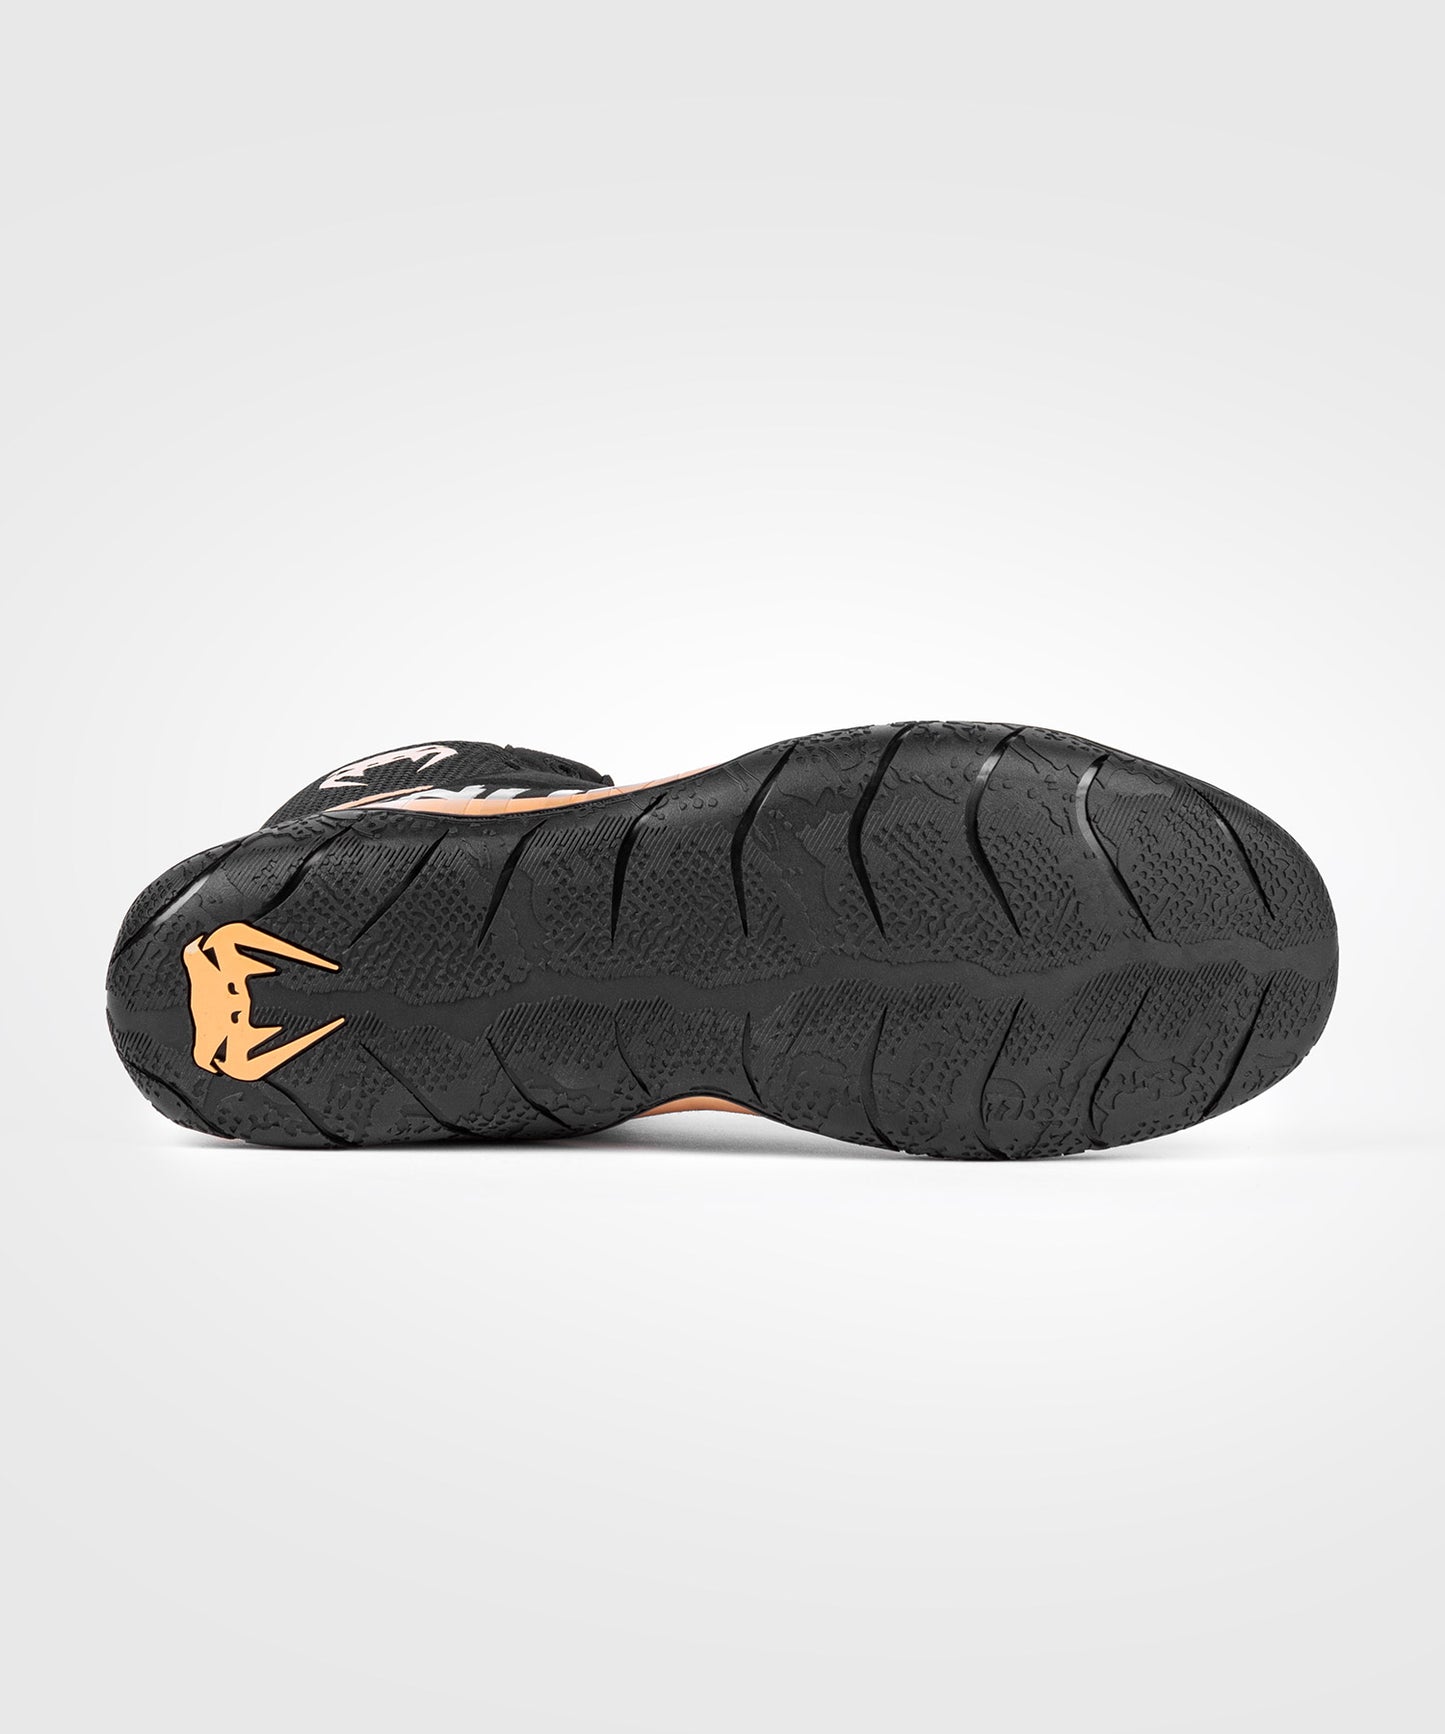 Venum Elite Wrestling Shoes - Black/Bronze